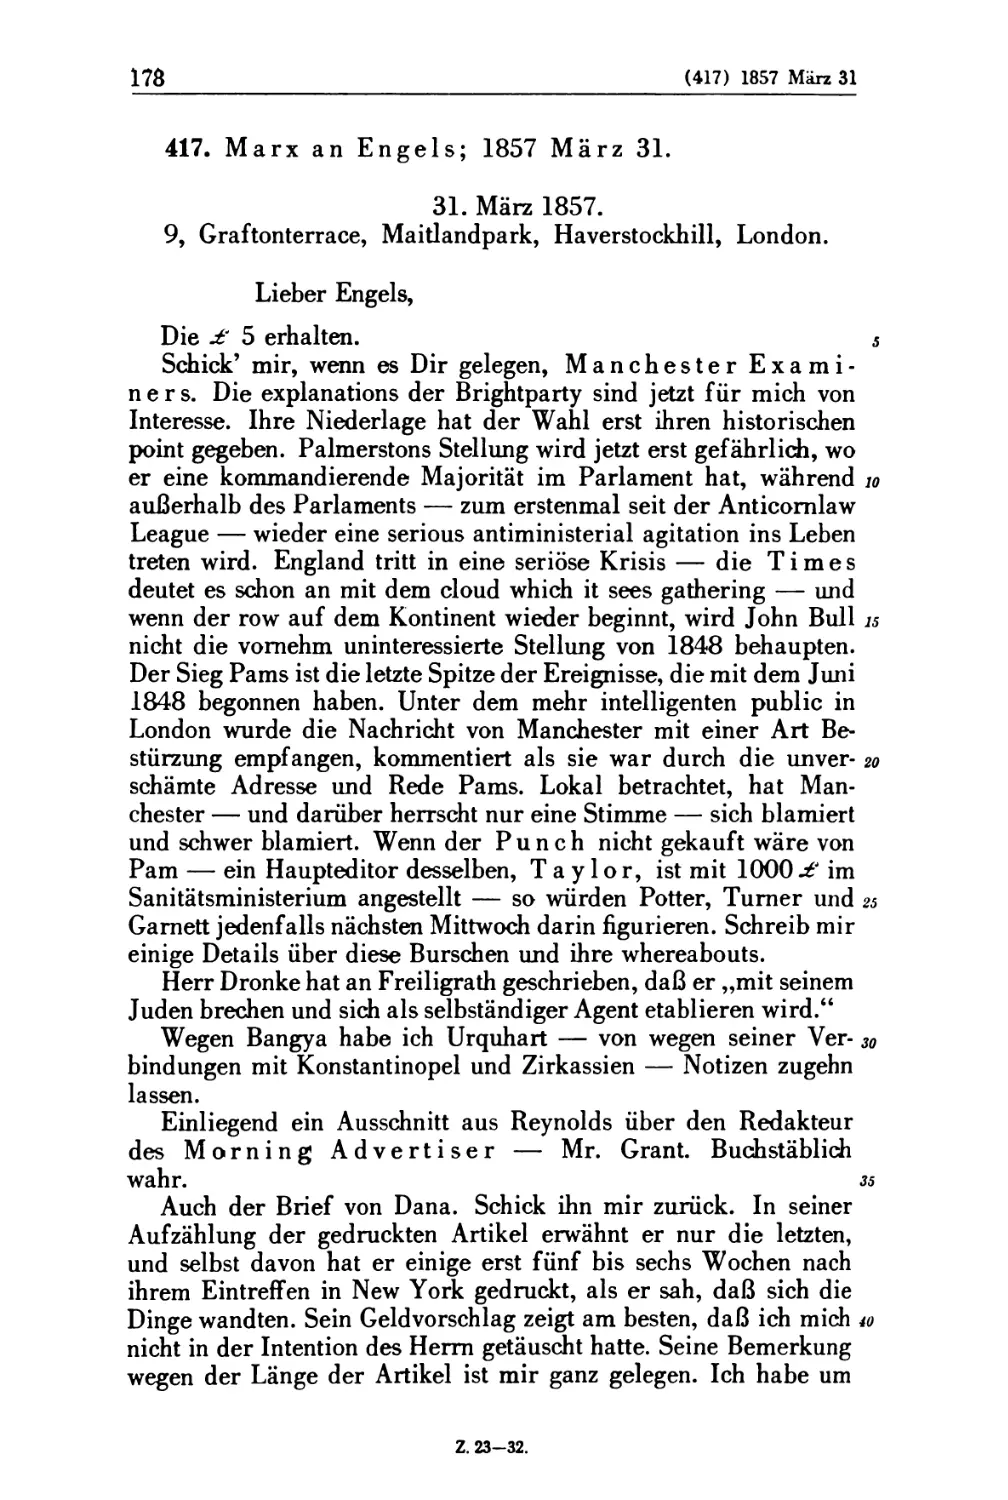 417. Marx an Engels; 1857 März 31